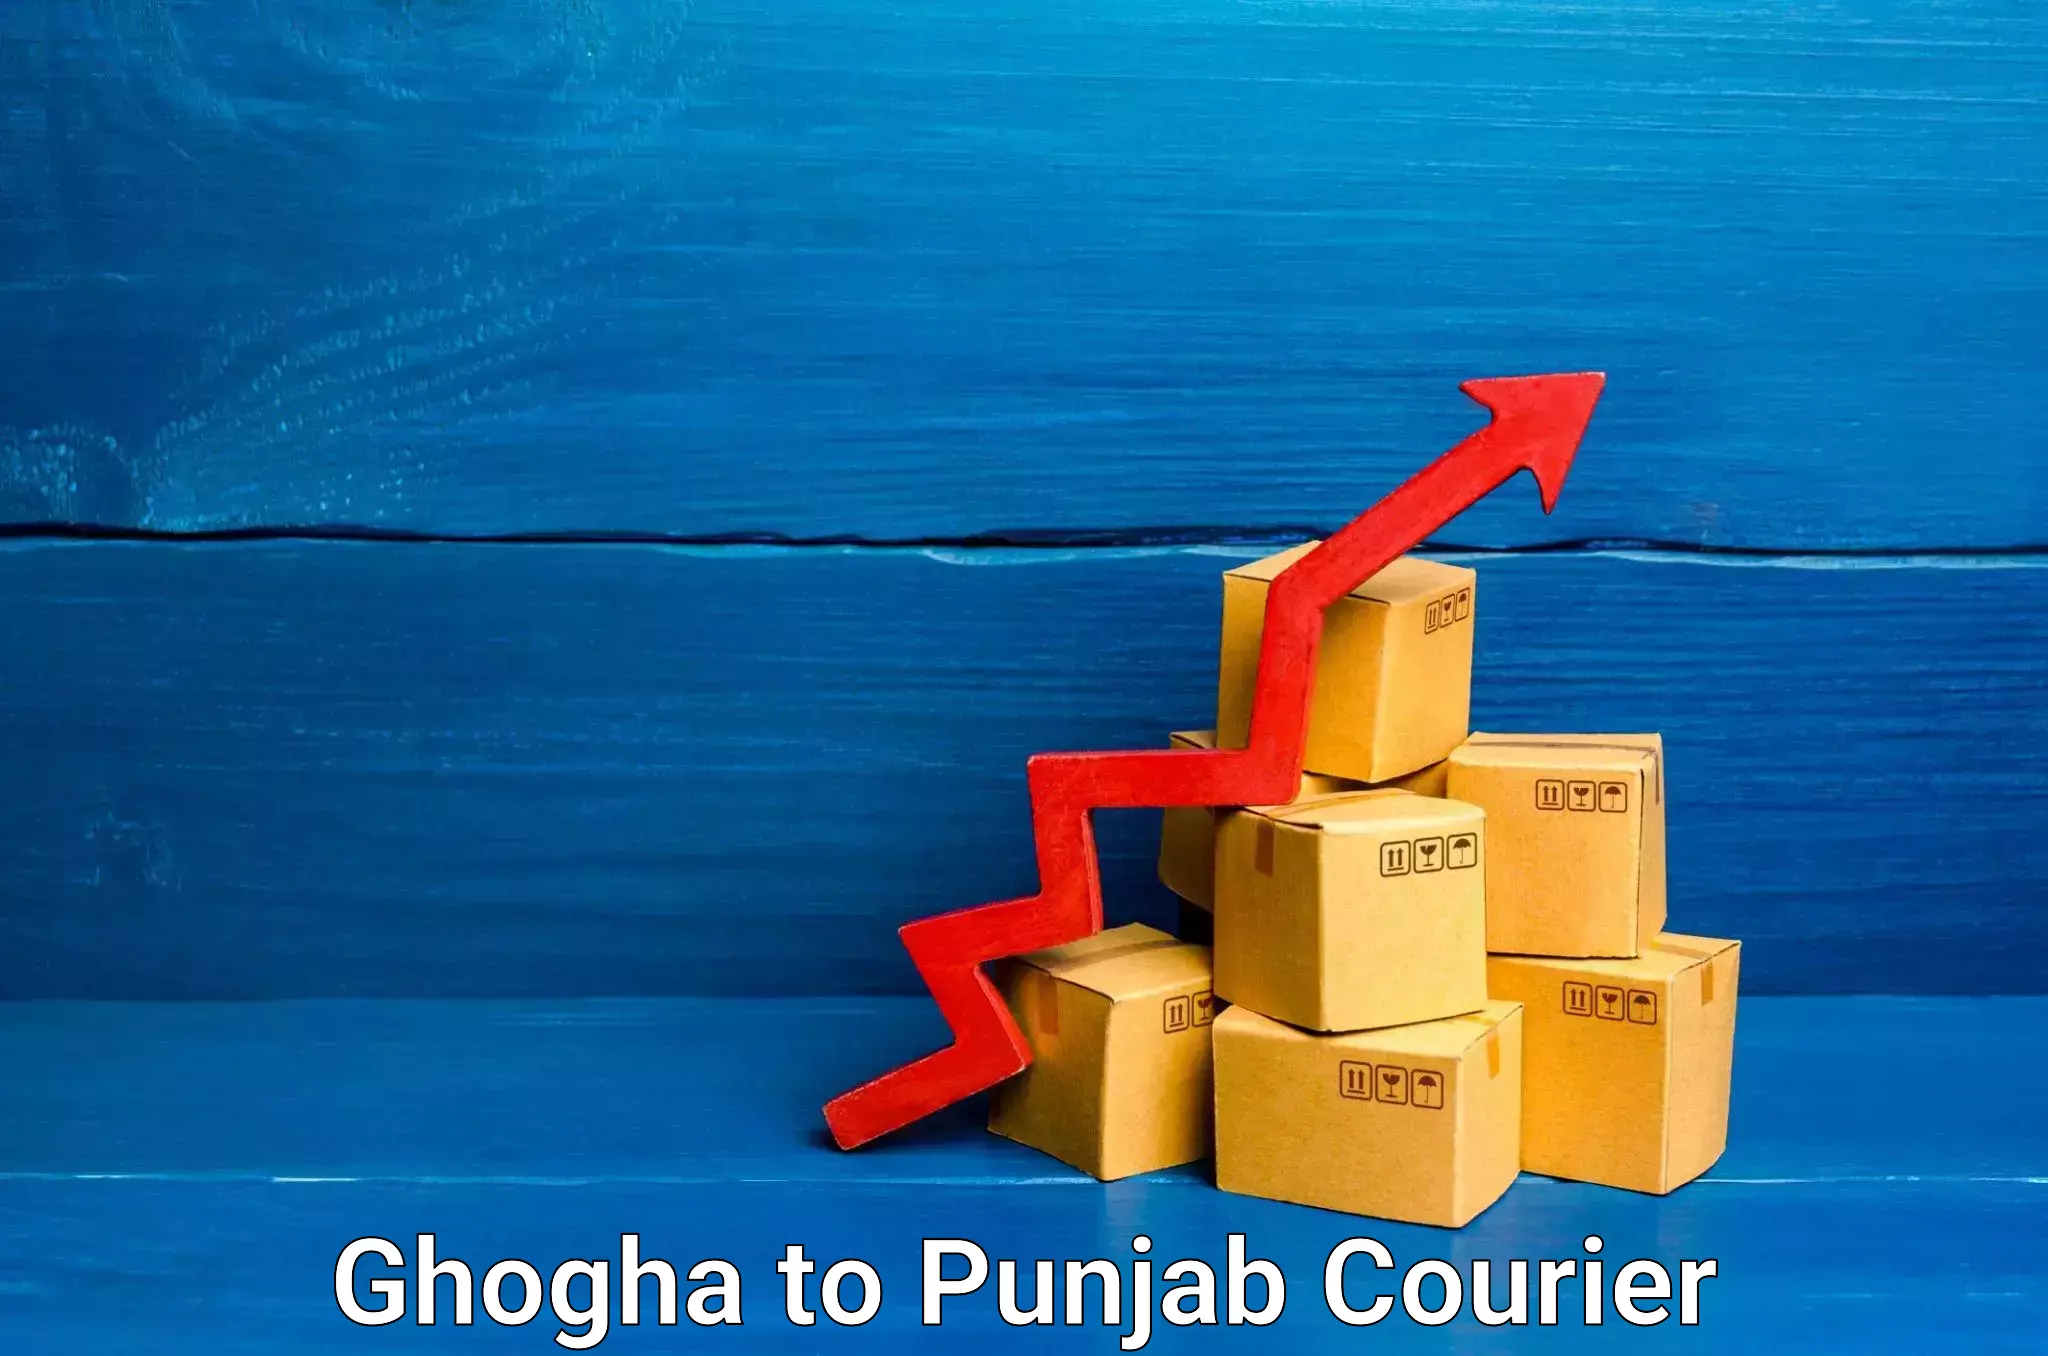 Furniture transport company Ghogha to Punjab